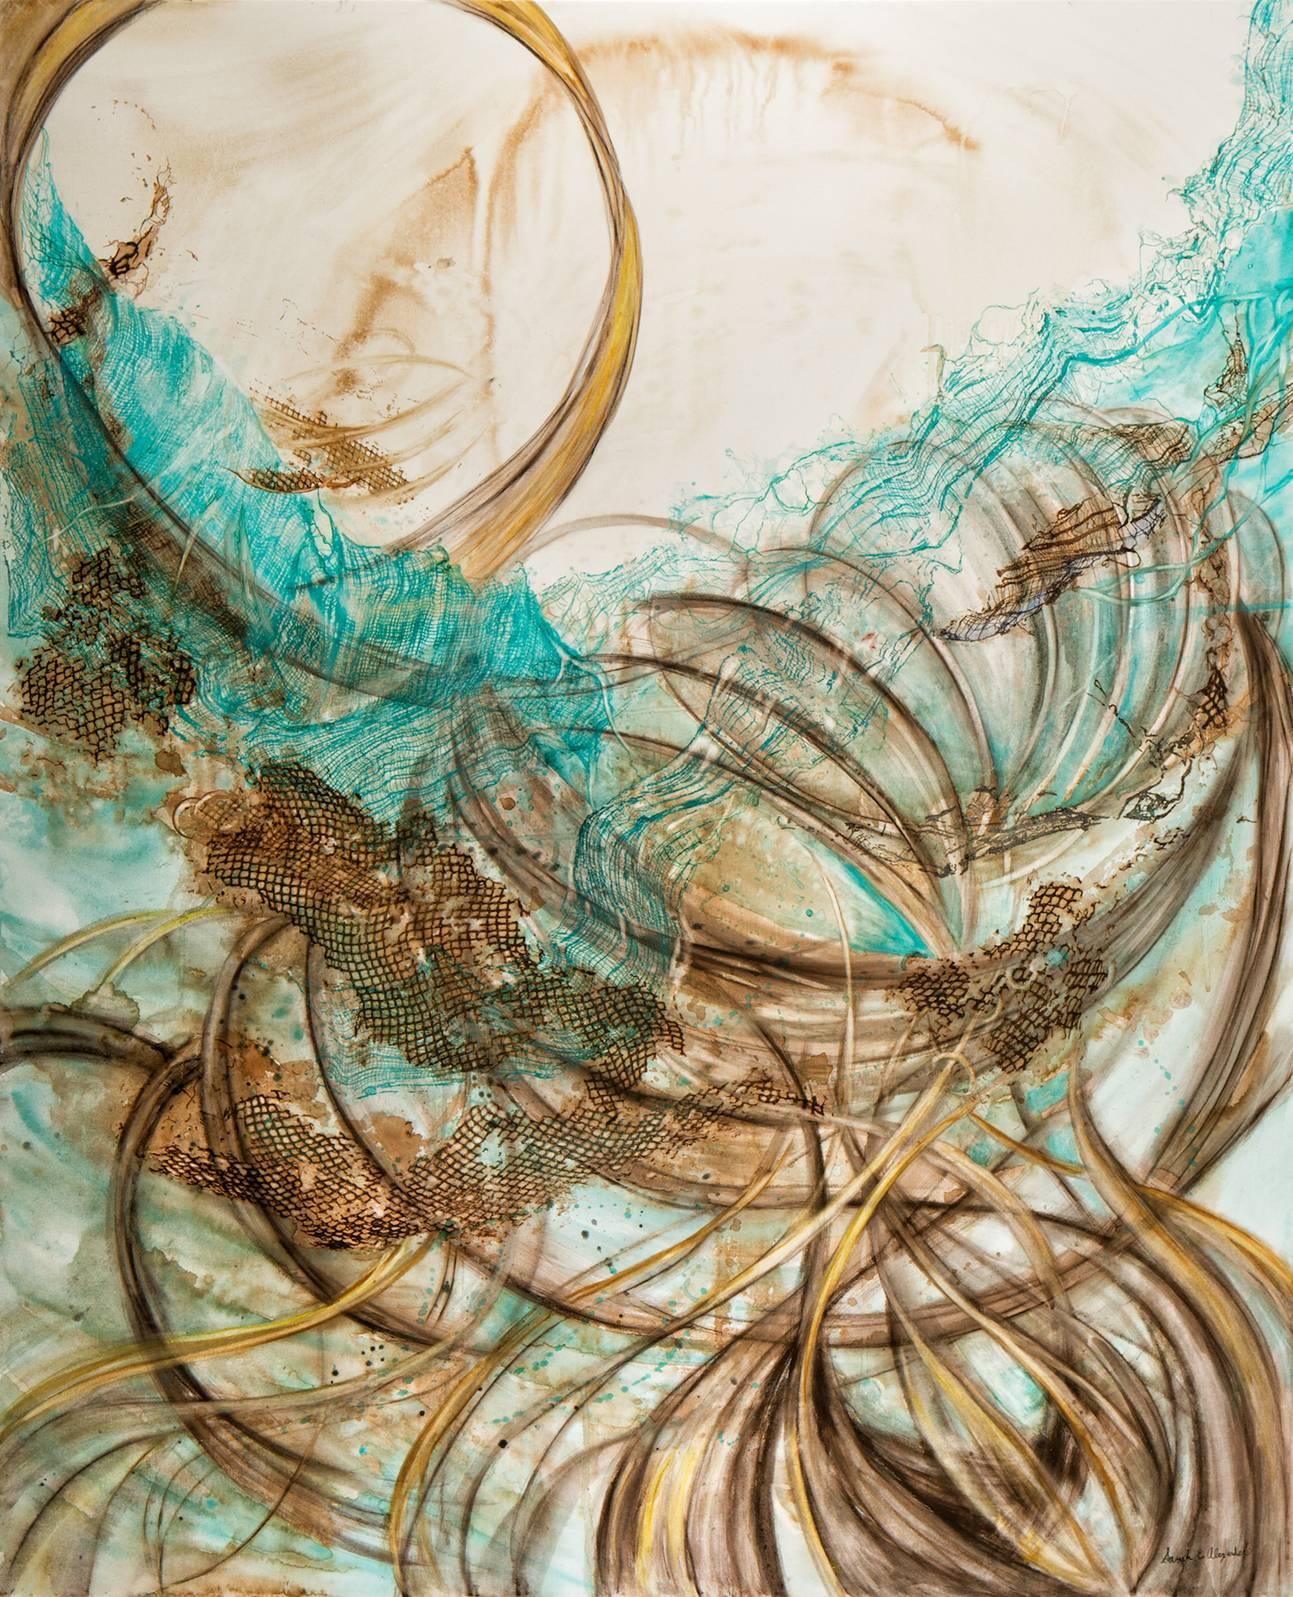 Sarah Alexander Abstract Painting – "In Flux", abstrakt, türkis, braun, Mischtechnik, Aquarell, Malerei